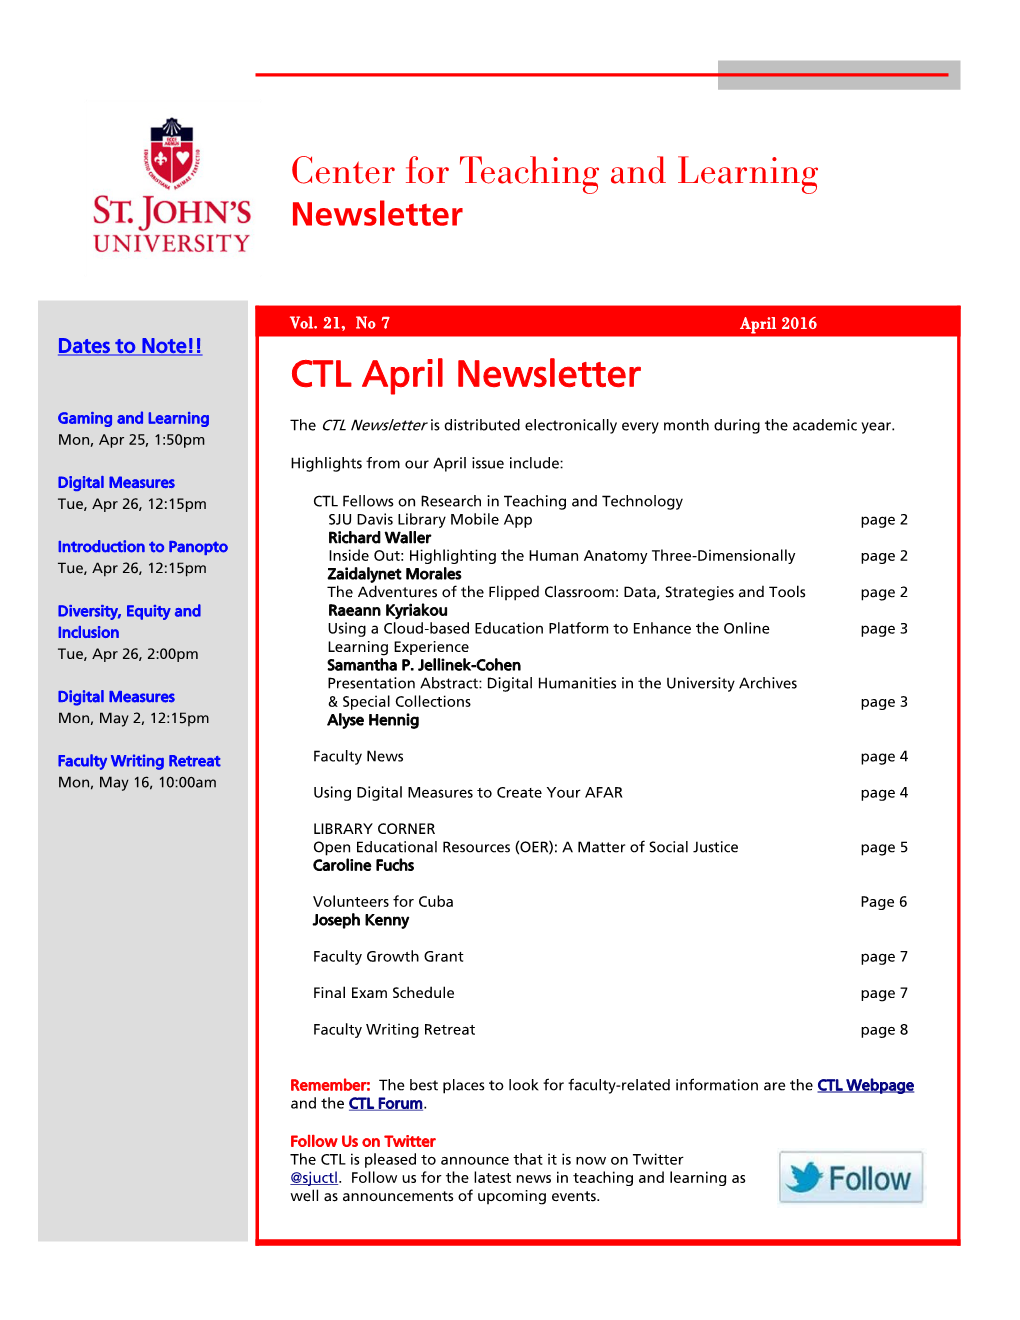 Center for Teaching and Learning Newsletter